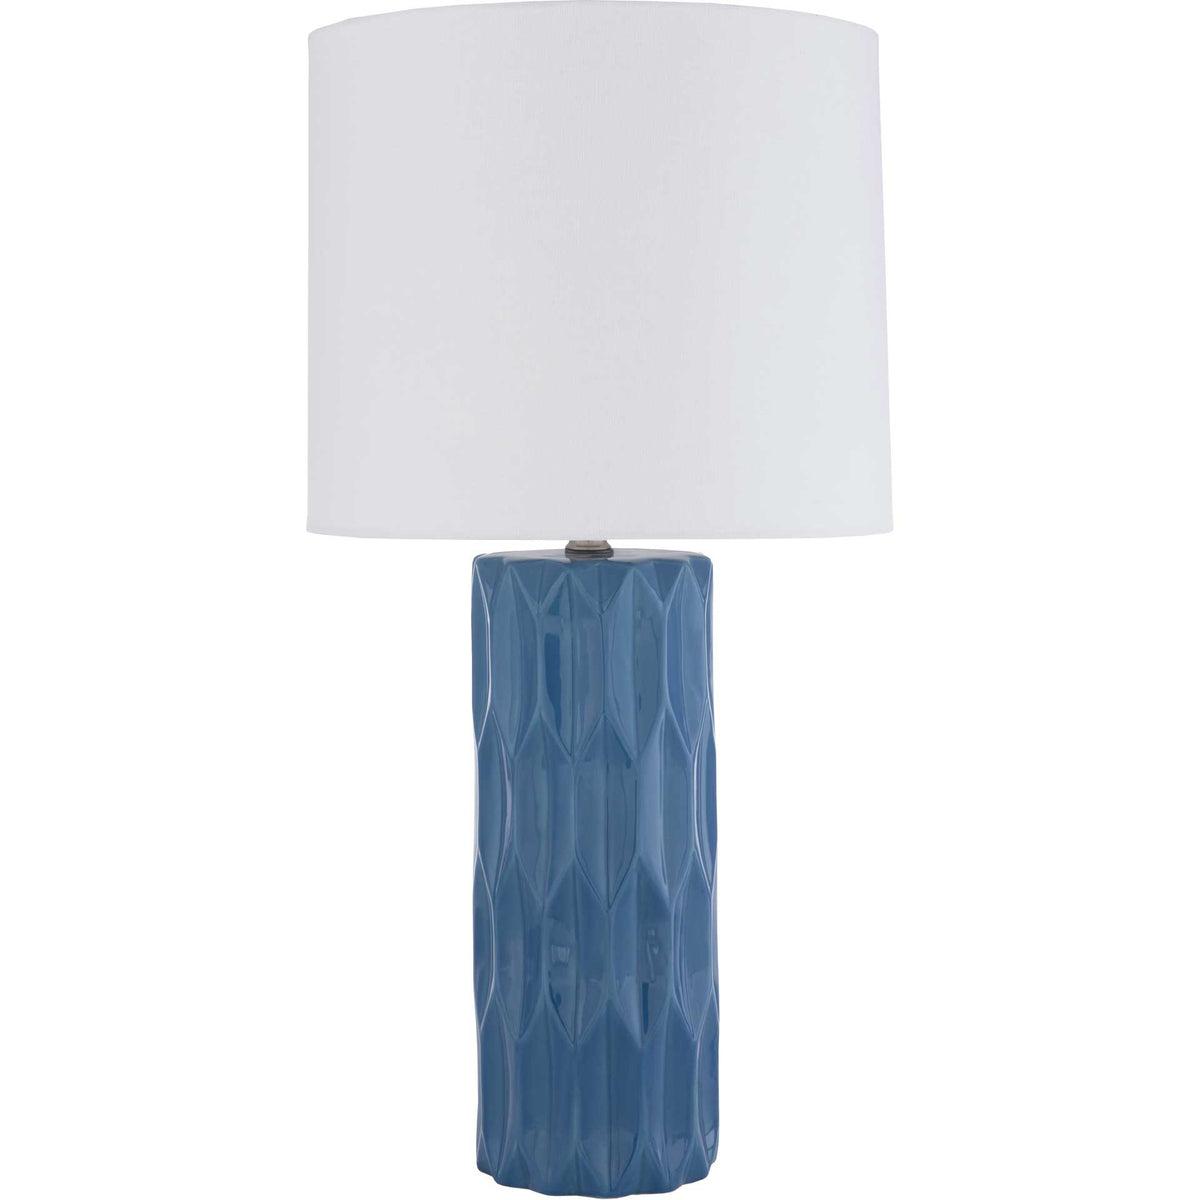 Drake Table Lamp Bright Blue/White/Blue